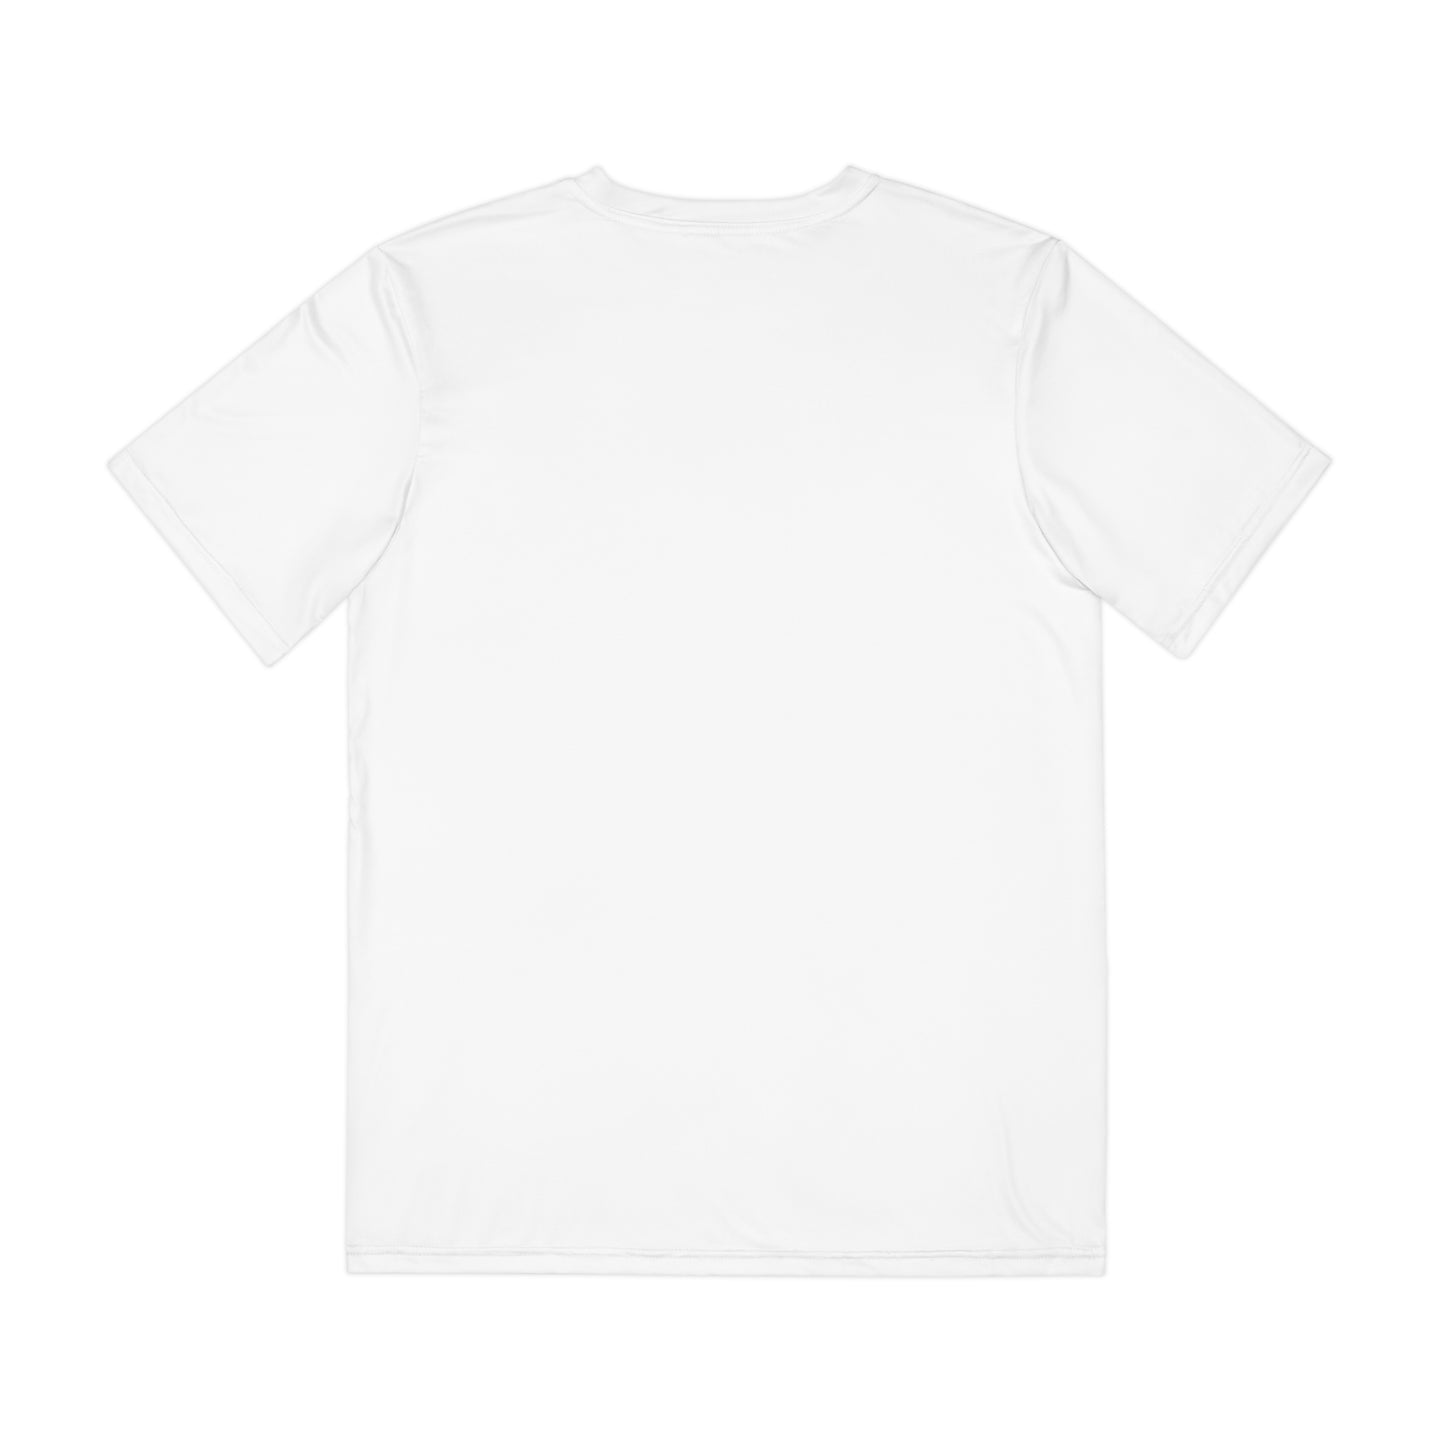 R&RH Journey White T-shirt